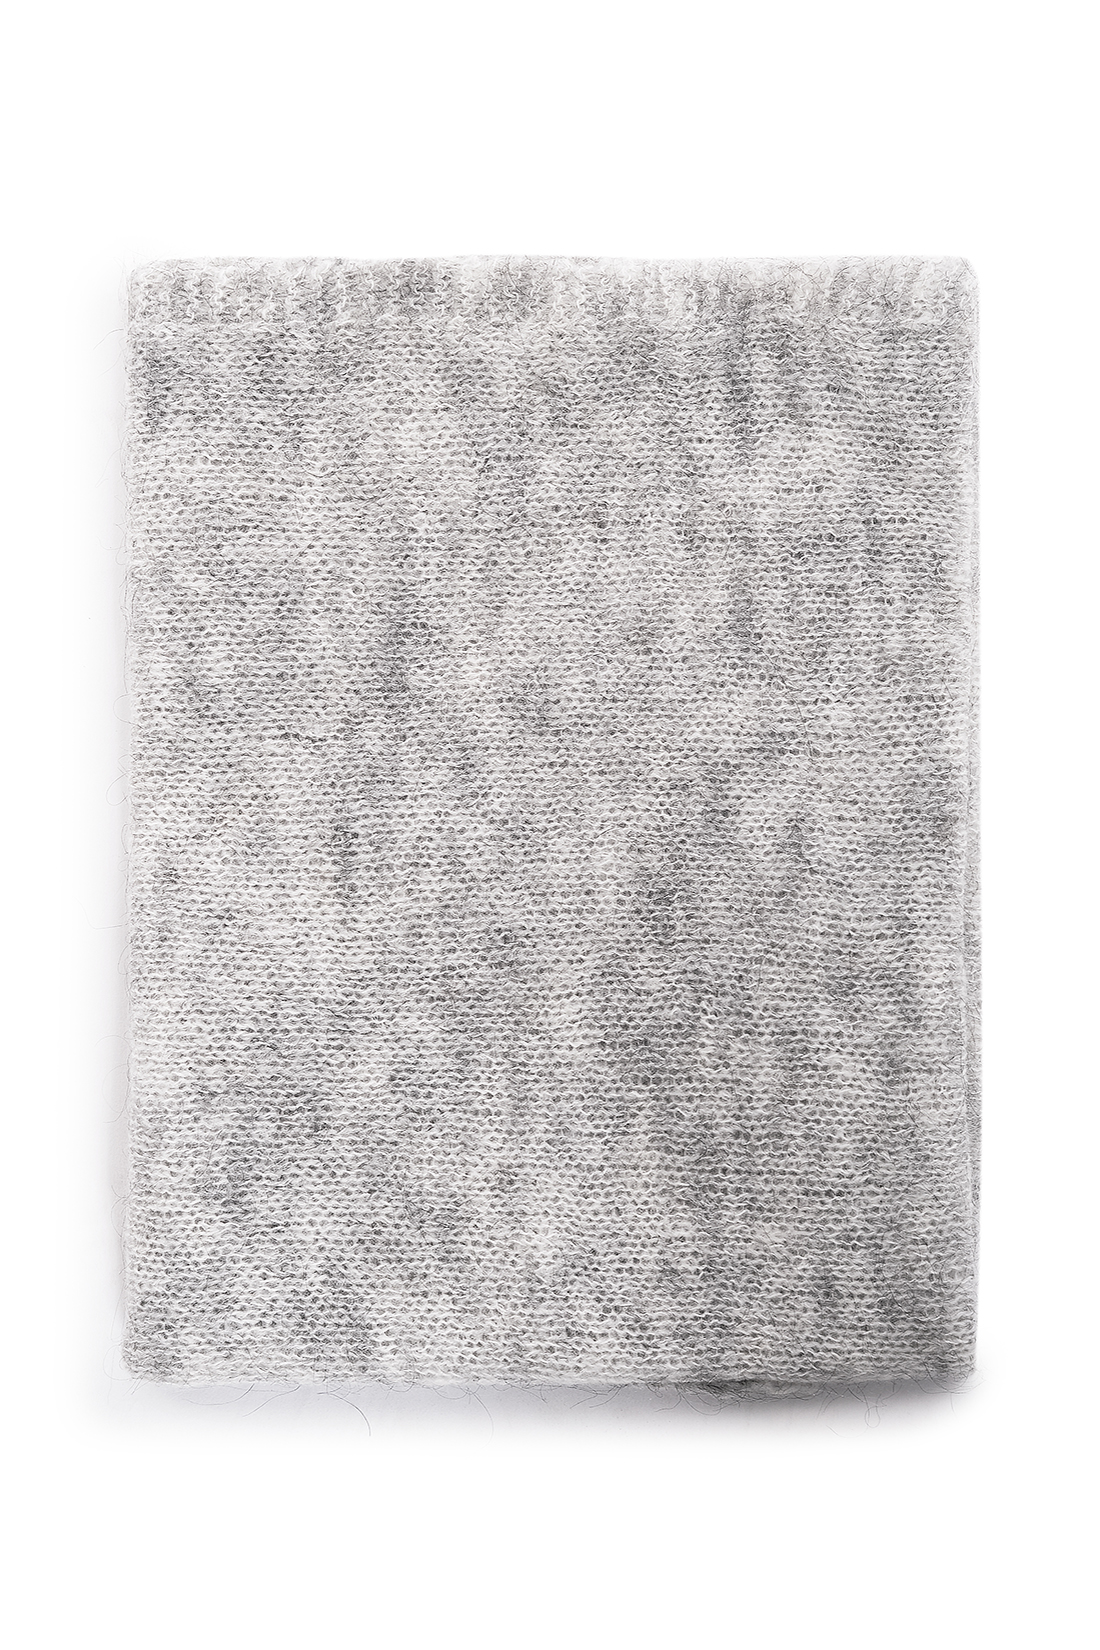 Вязаная косынка (арт. baon B359523), размер Без/раз, цвет silver melange#серый Вязаная косынка (арт. baon B359523) - фото 2